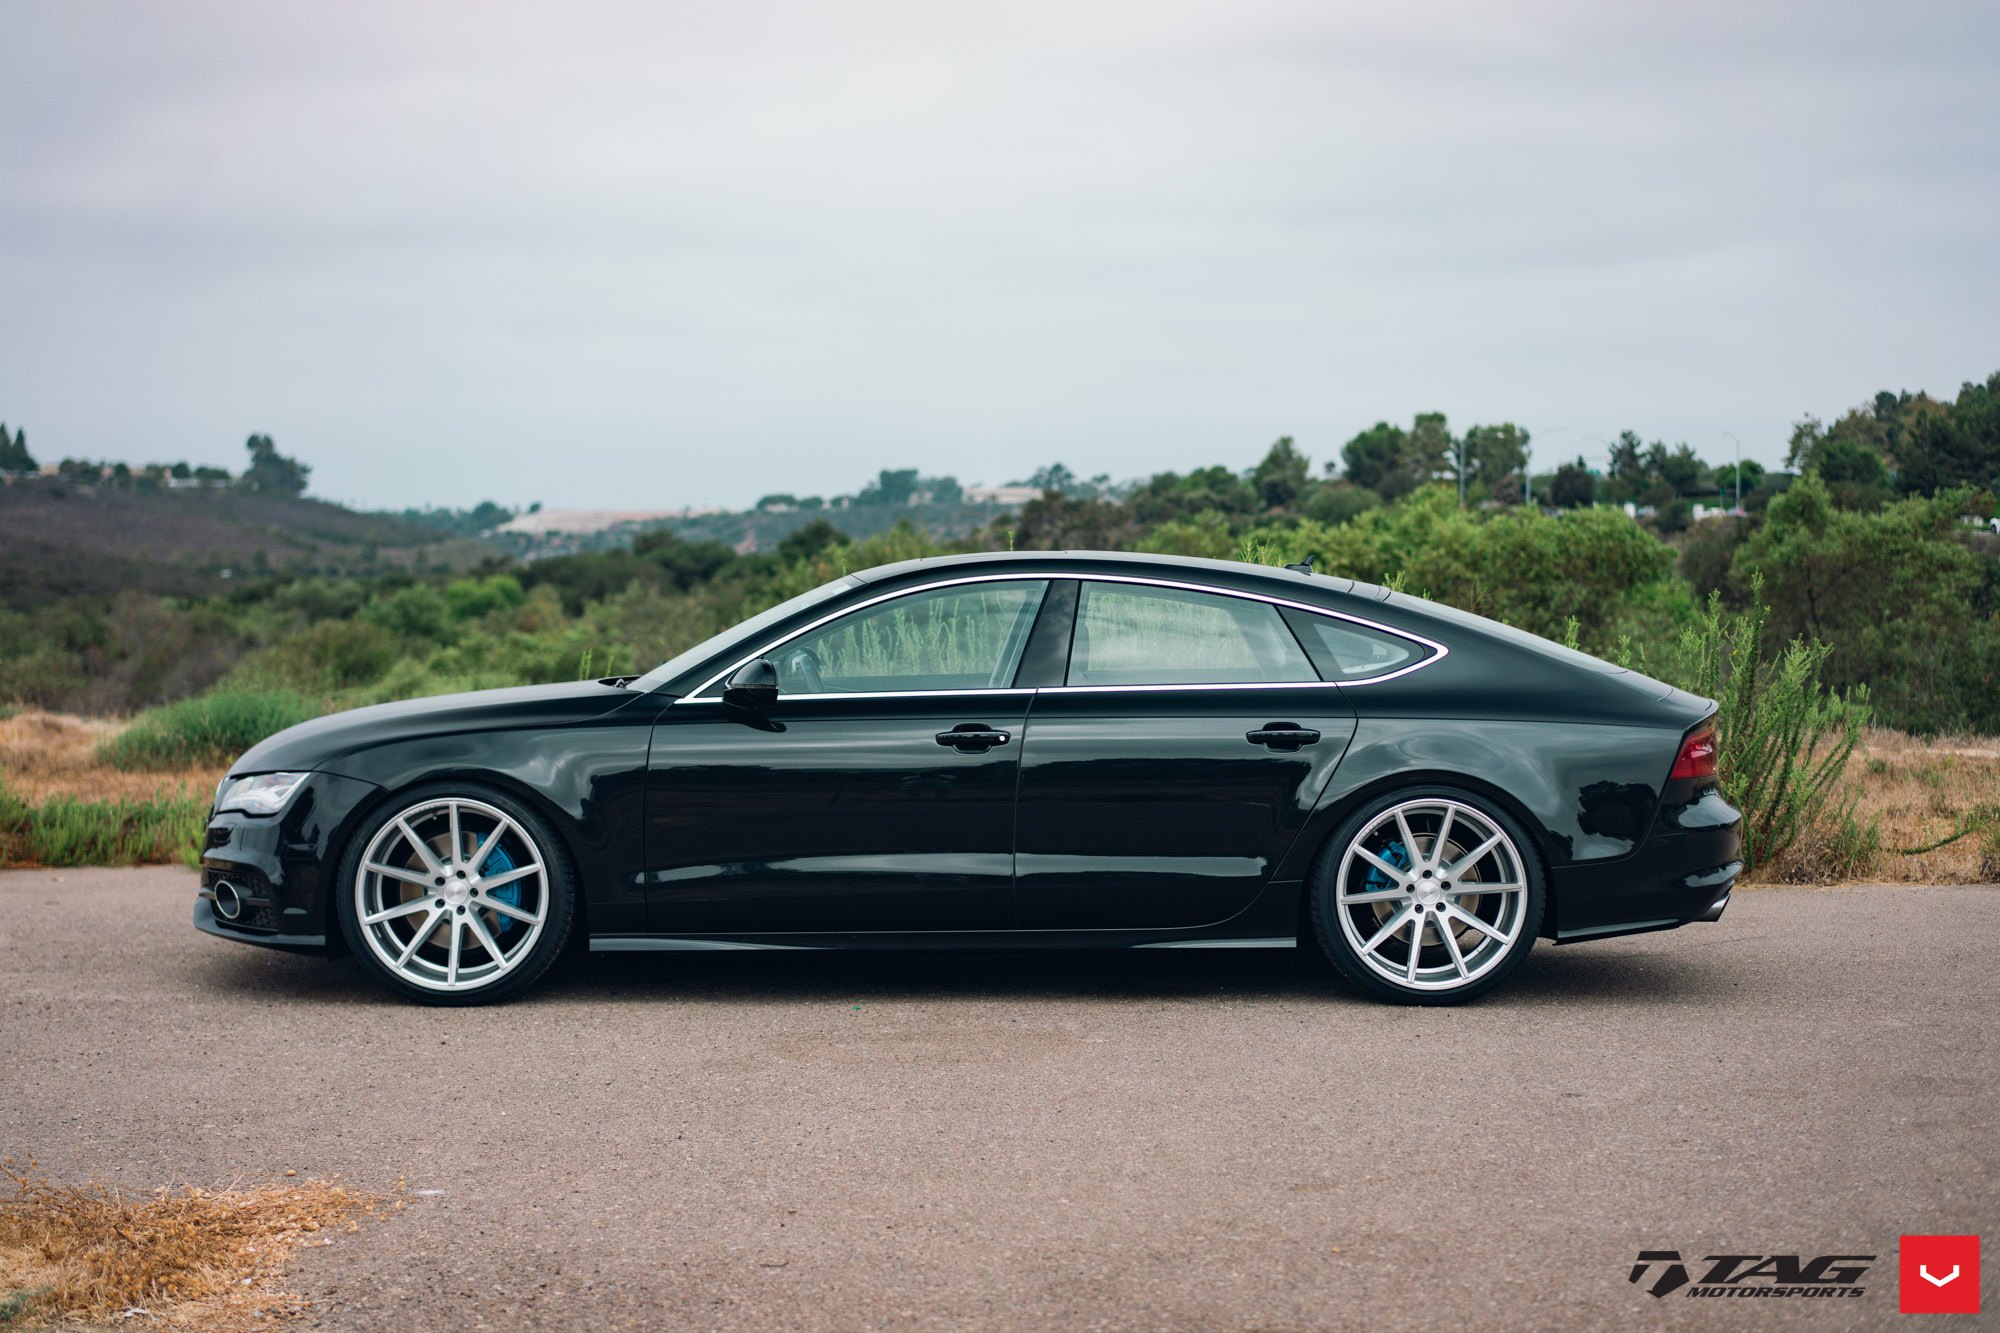 Chrome Vossen Wheels on Black Audi A7 - Photo by Vossen